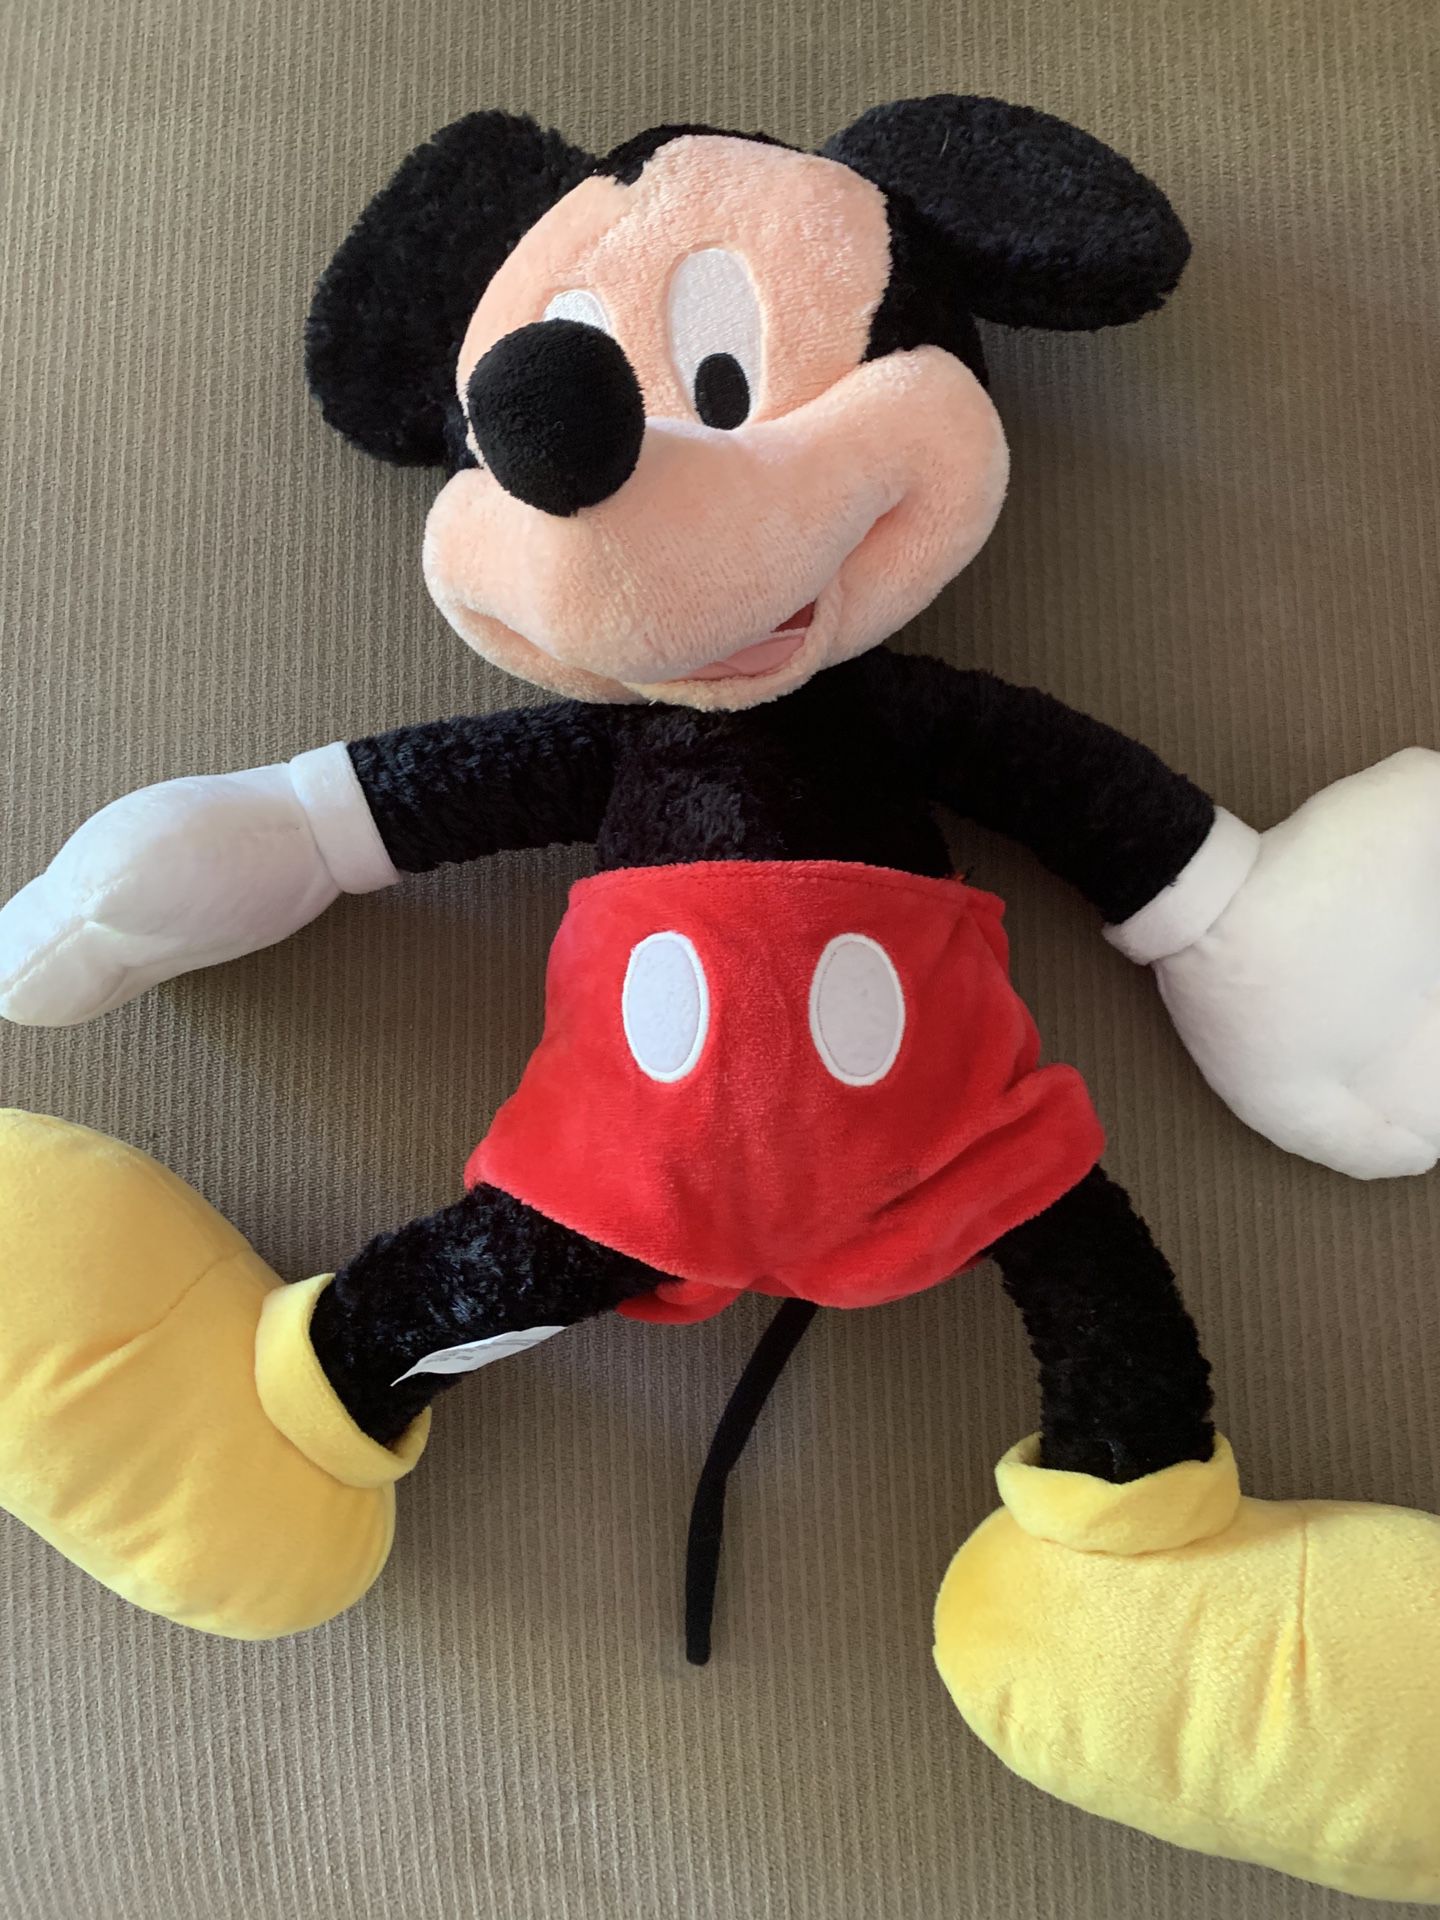 Disney Mickey Mouse plush plushy